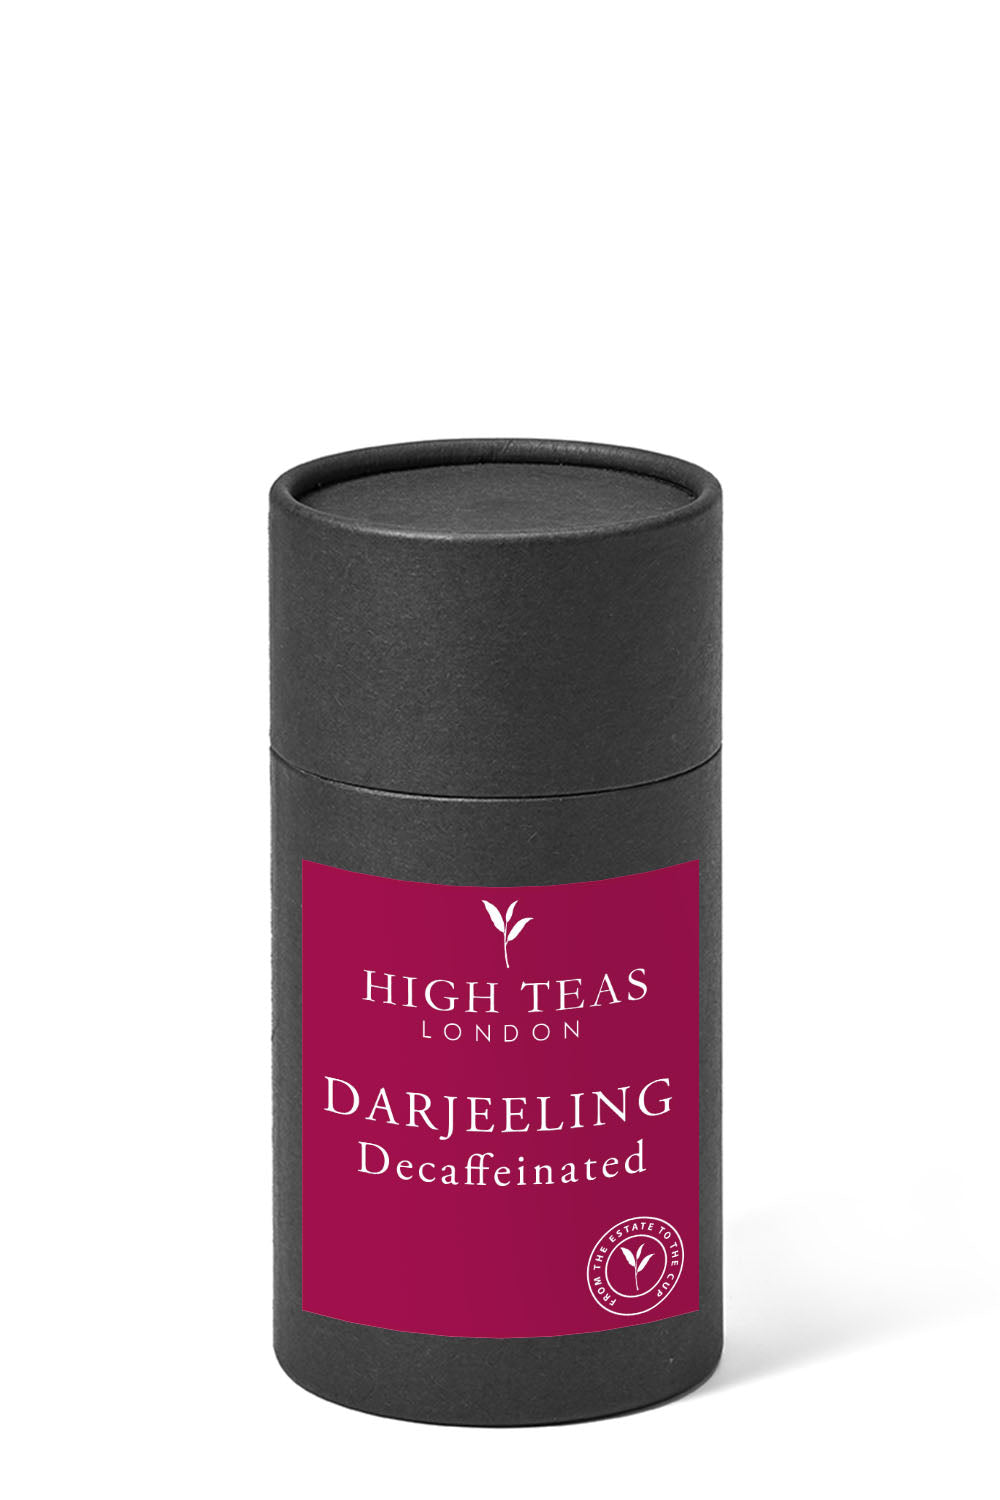 Darjeeling TGFOP decaffeinated-60g gift-Loose Leaf Tea-High Teas